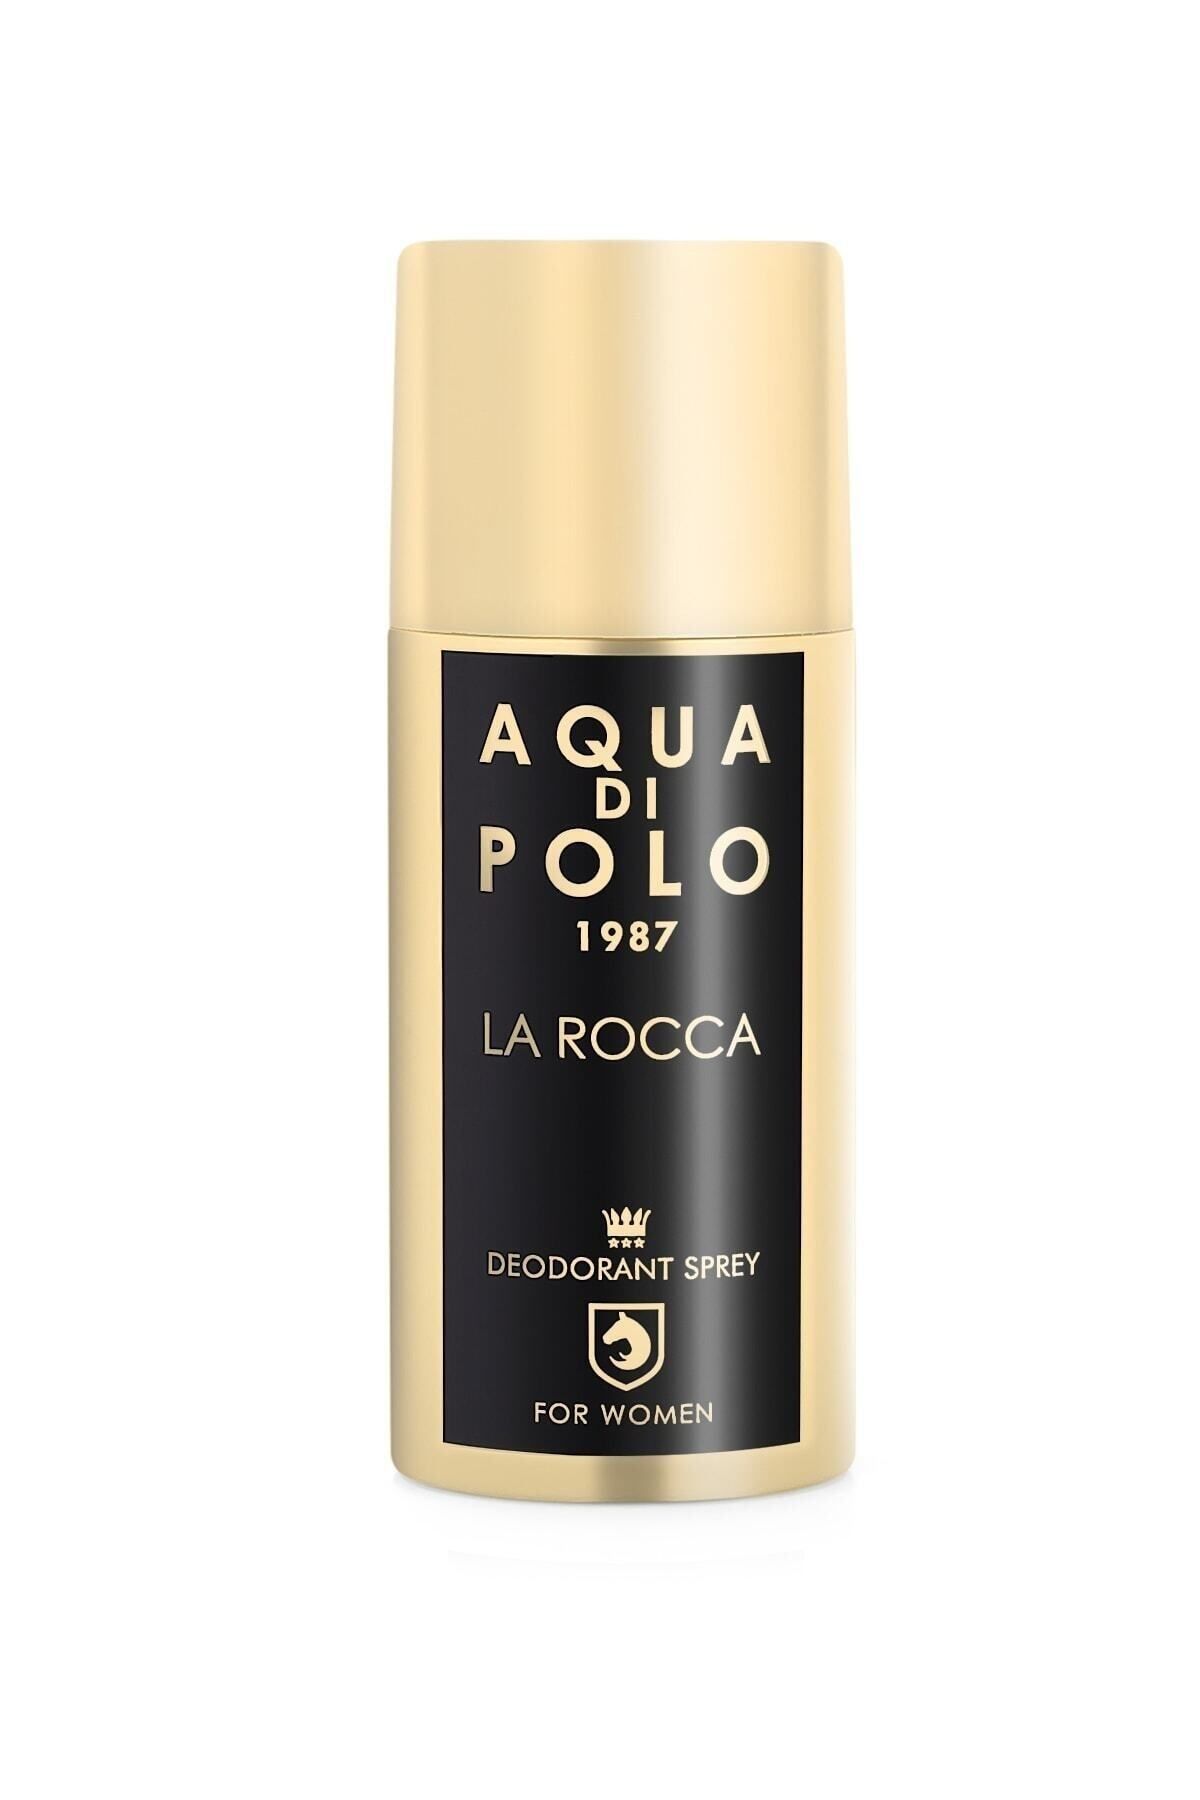 Aqua Di Polo 1987 La Rocca Deodorant 150 ml Kadın Appdlr03kd